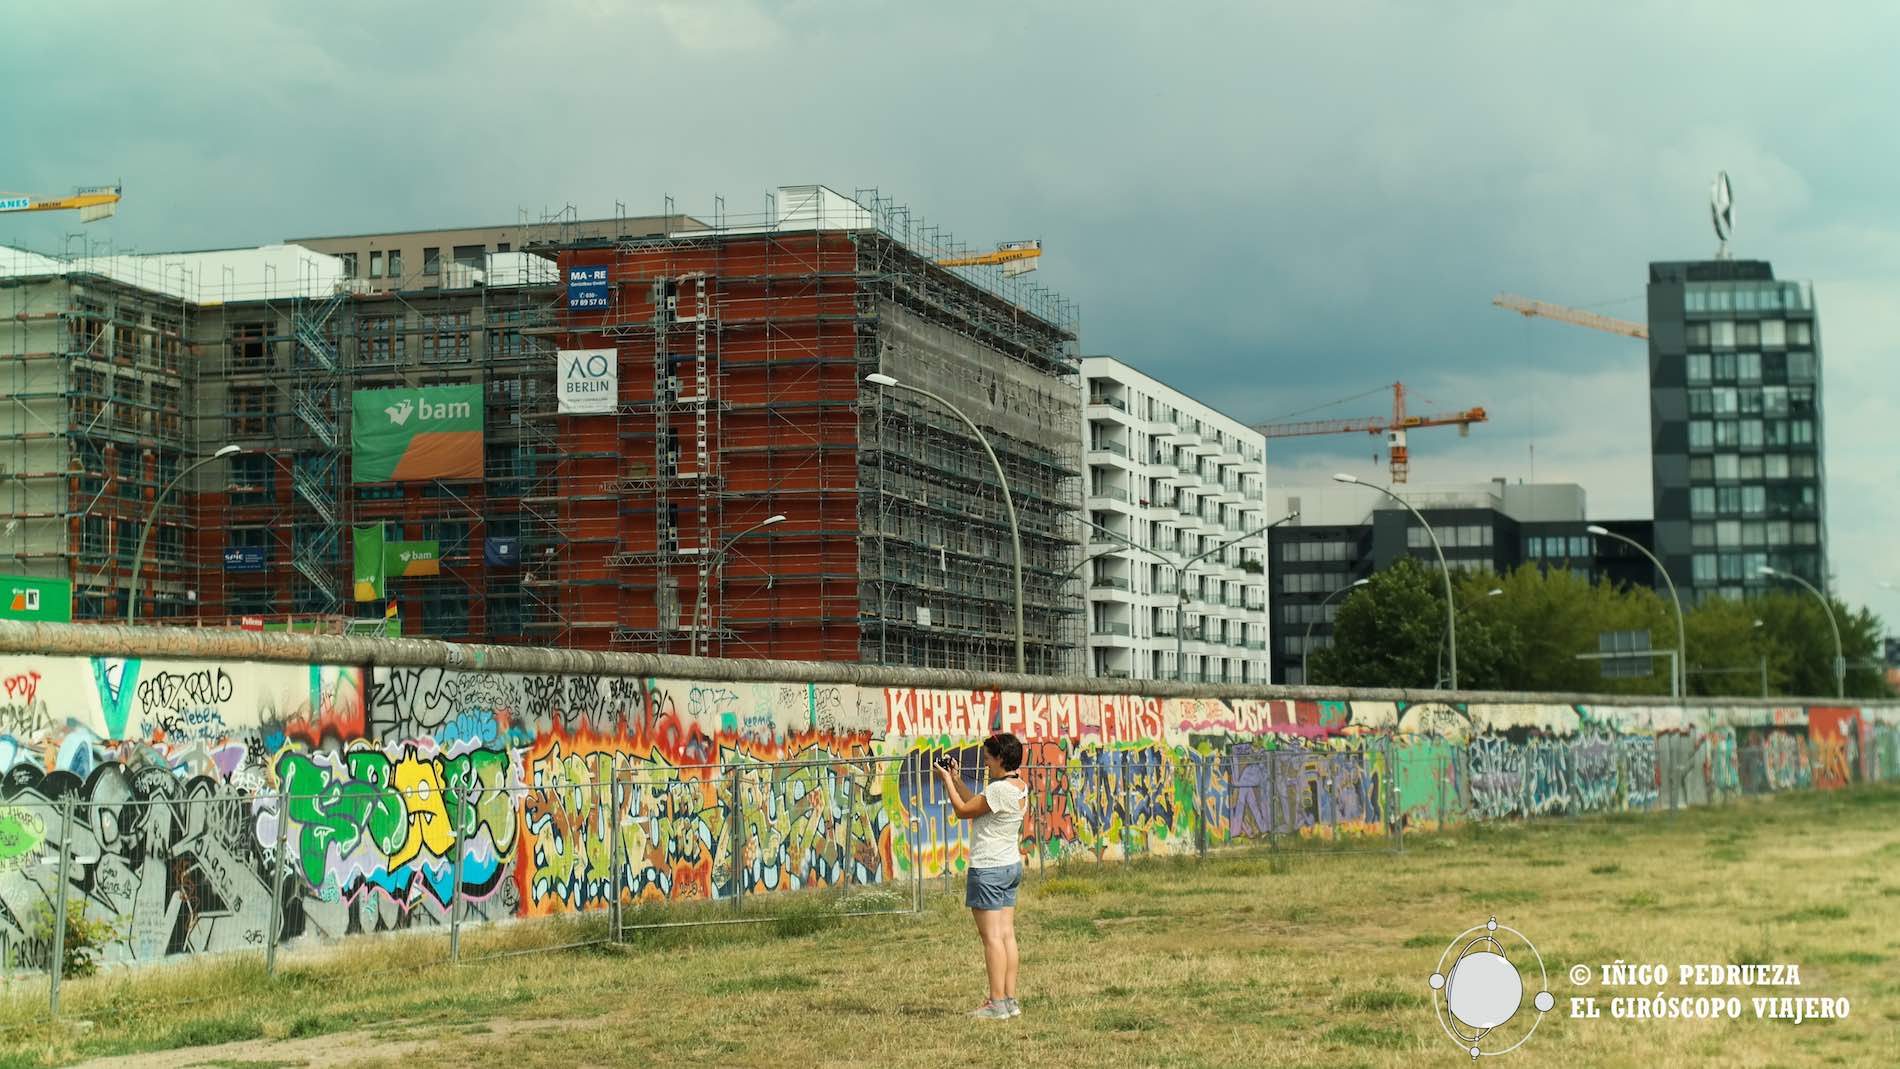 Muro de Berlin en la Mulherstrasse. ©Iñigo Pedrueza.